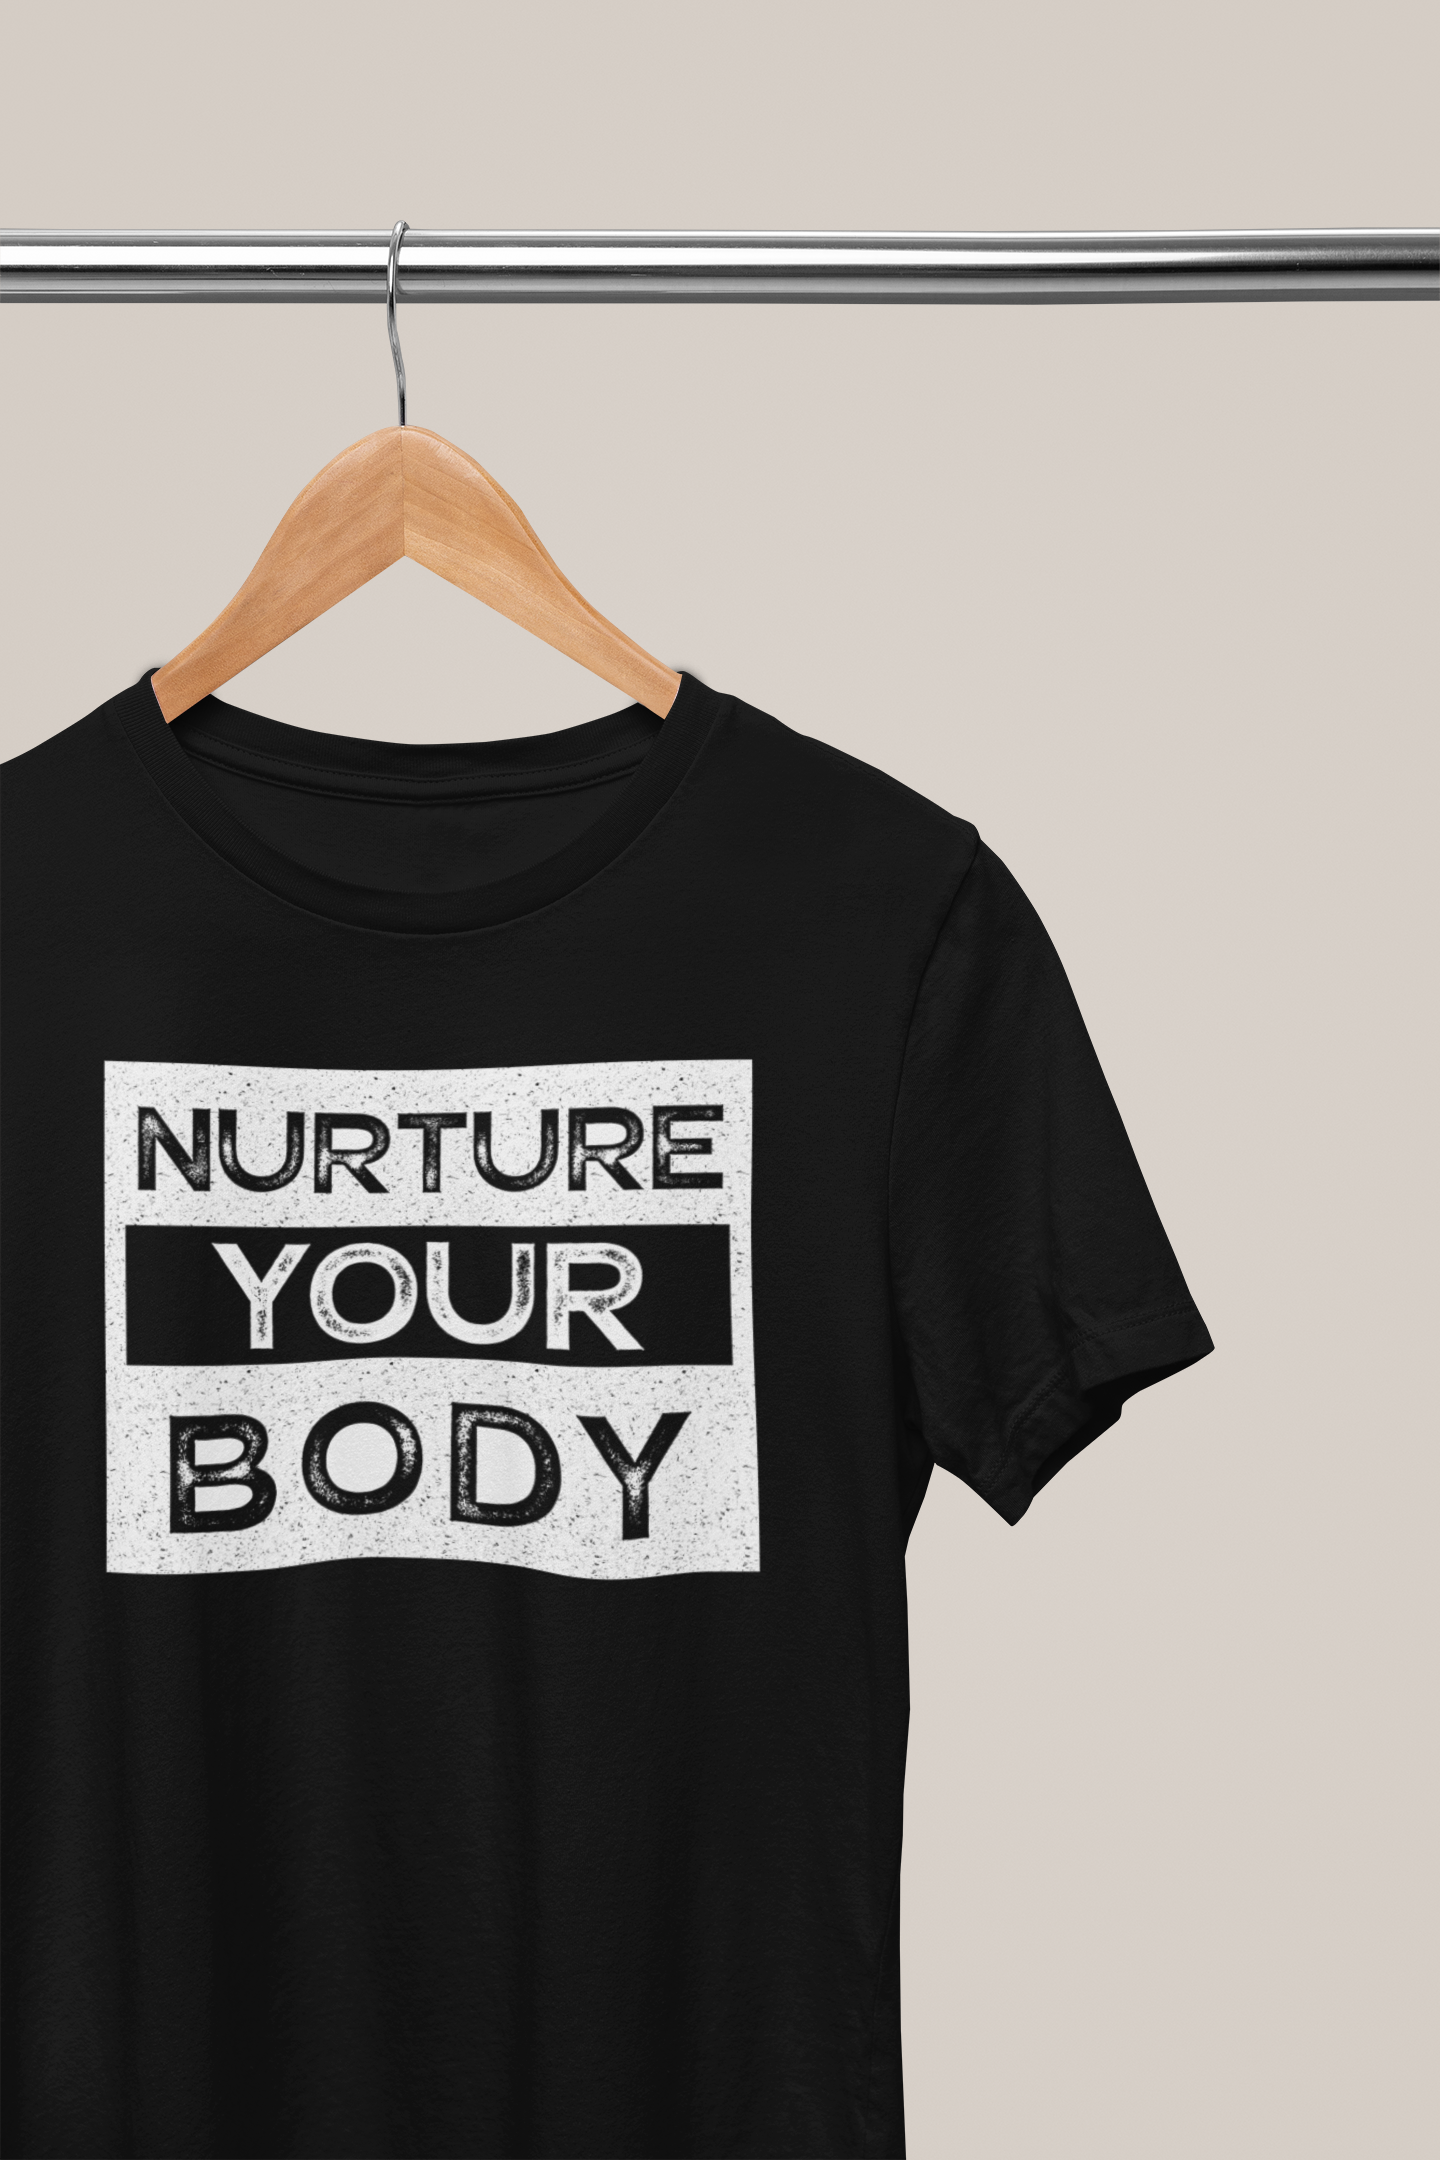 Nurture Your Body, Hoodies, Sweatshirts, Tees, and Mugs